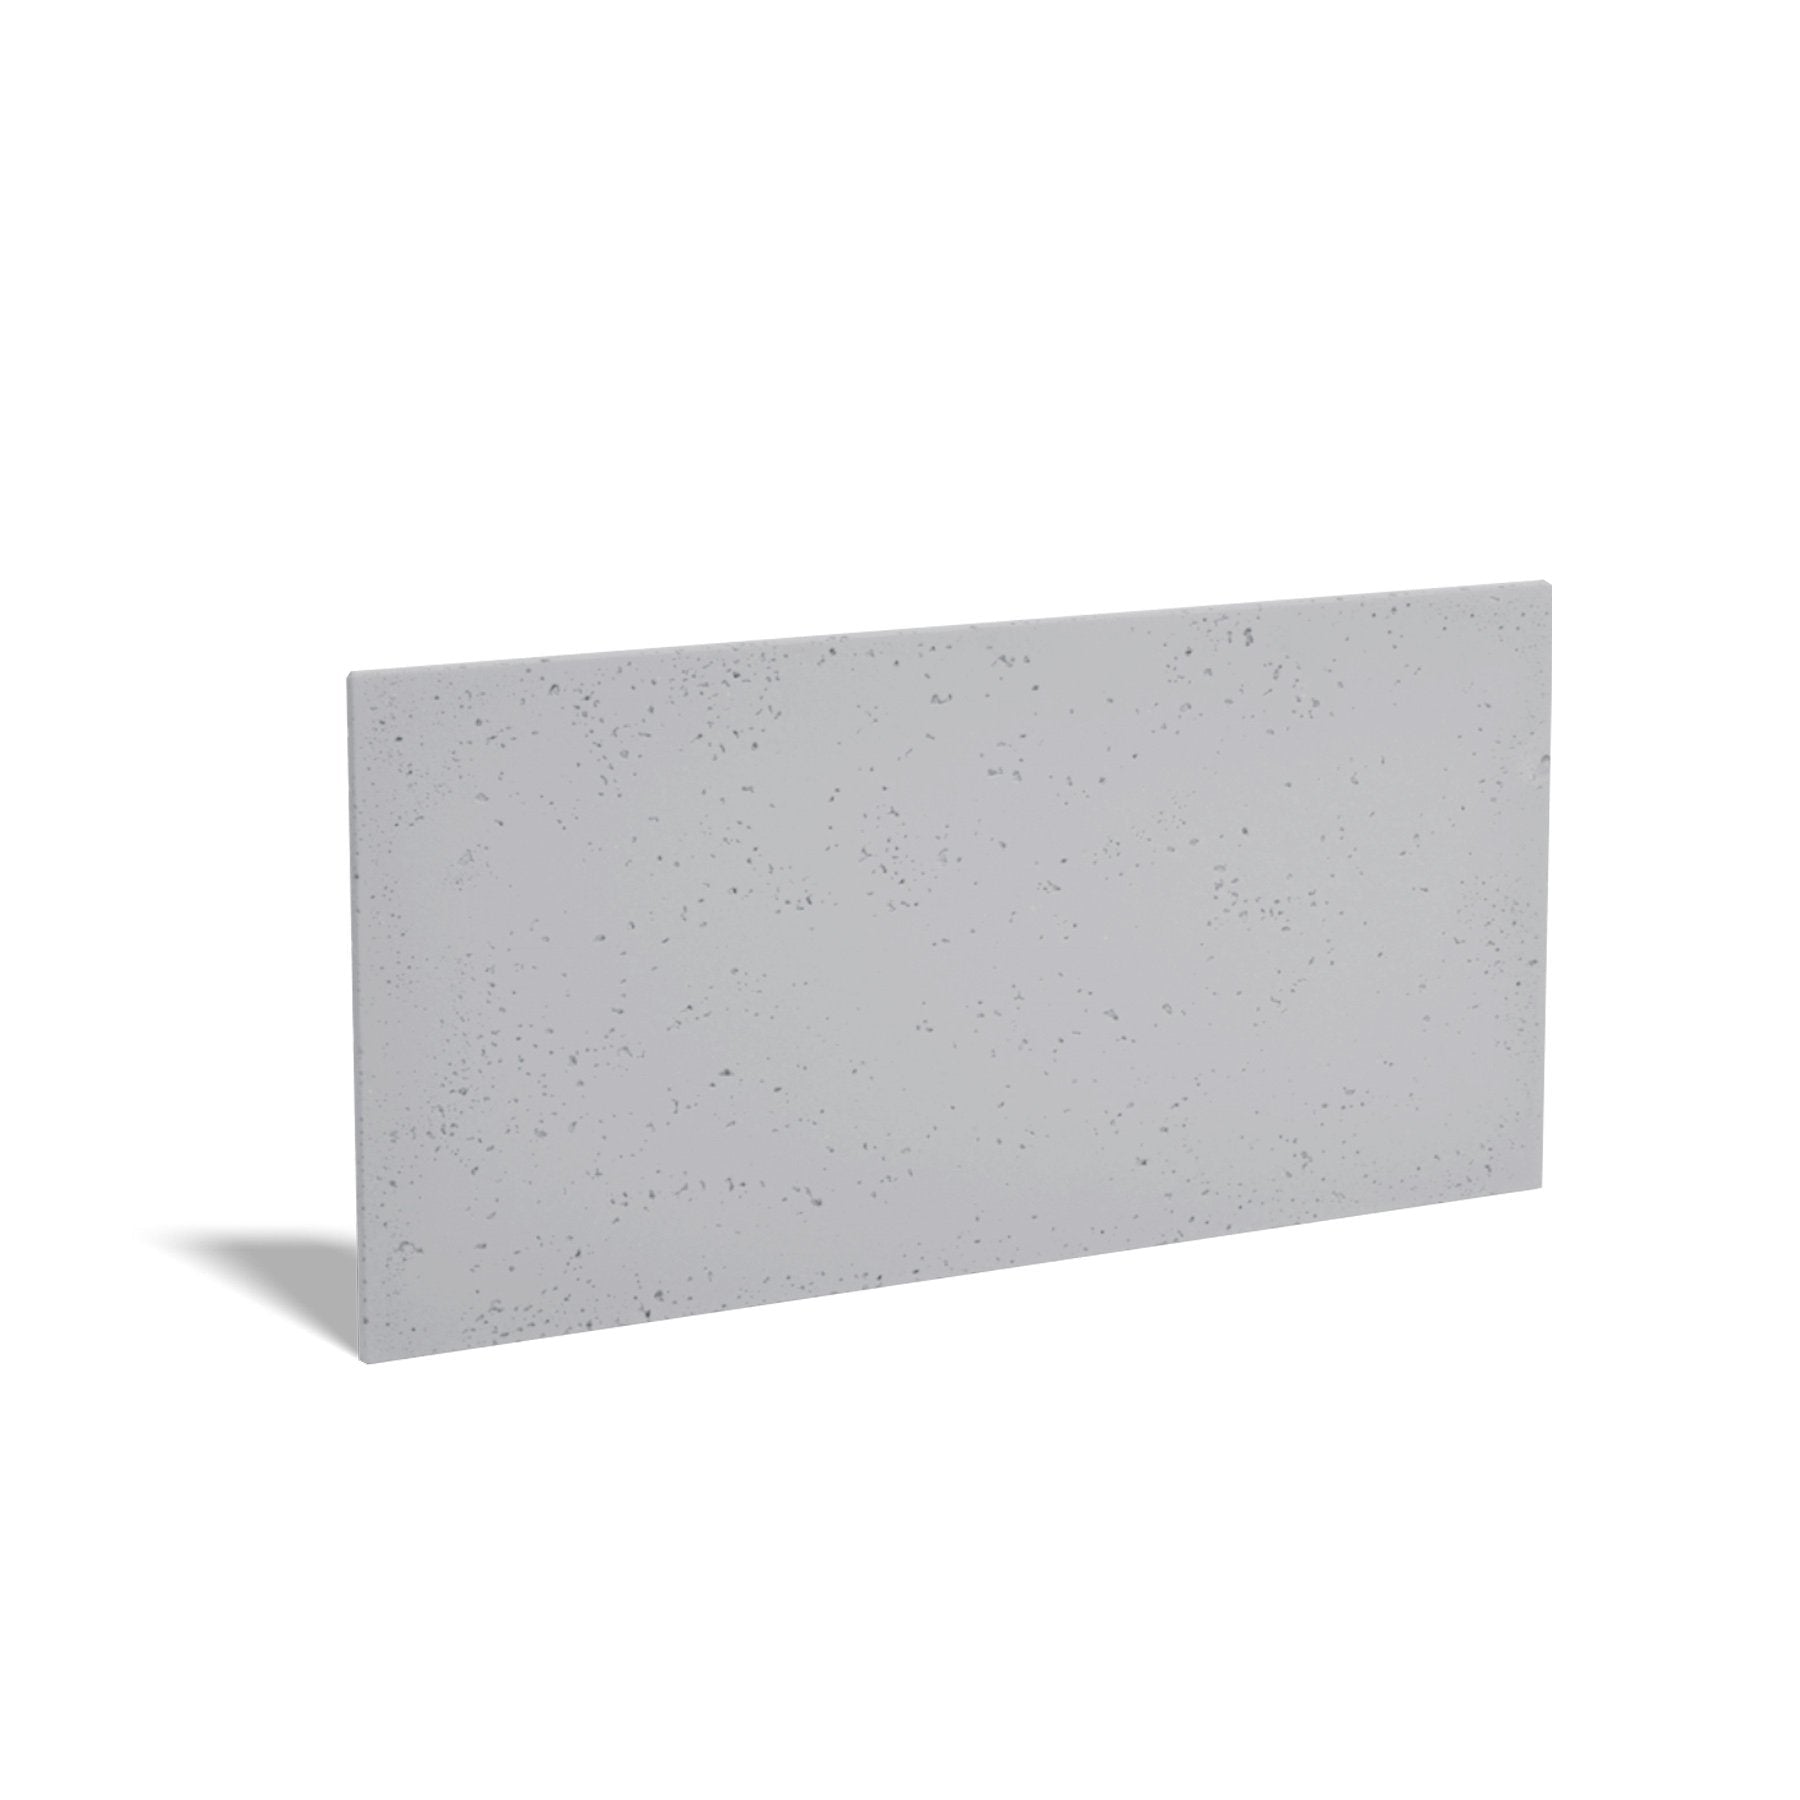 Concrete Wall Panel INTERIOR - 100 x 50 cm - Concrete Panels | DecorMania